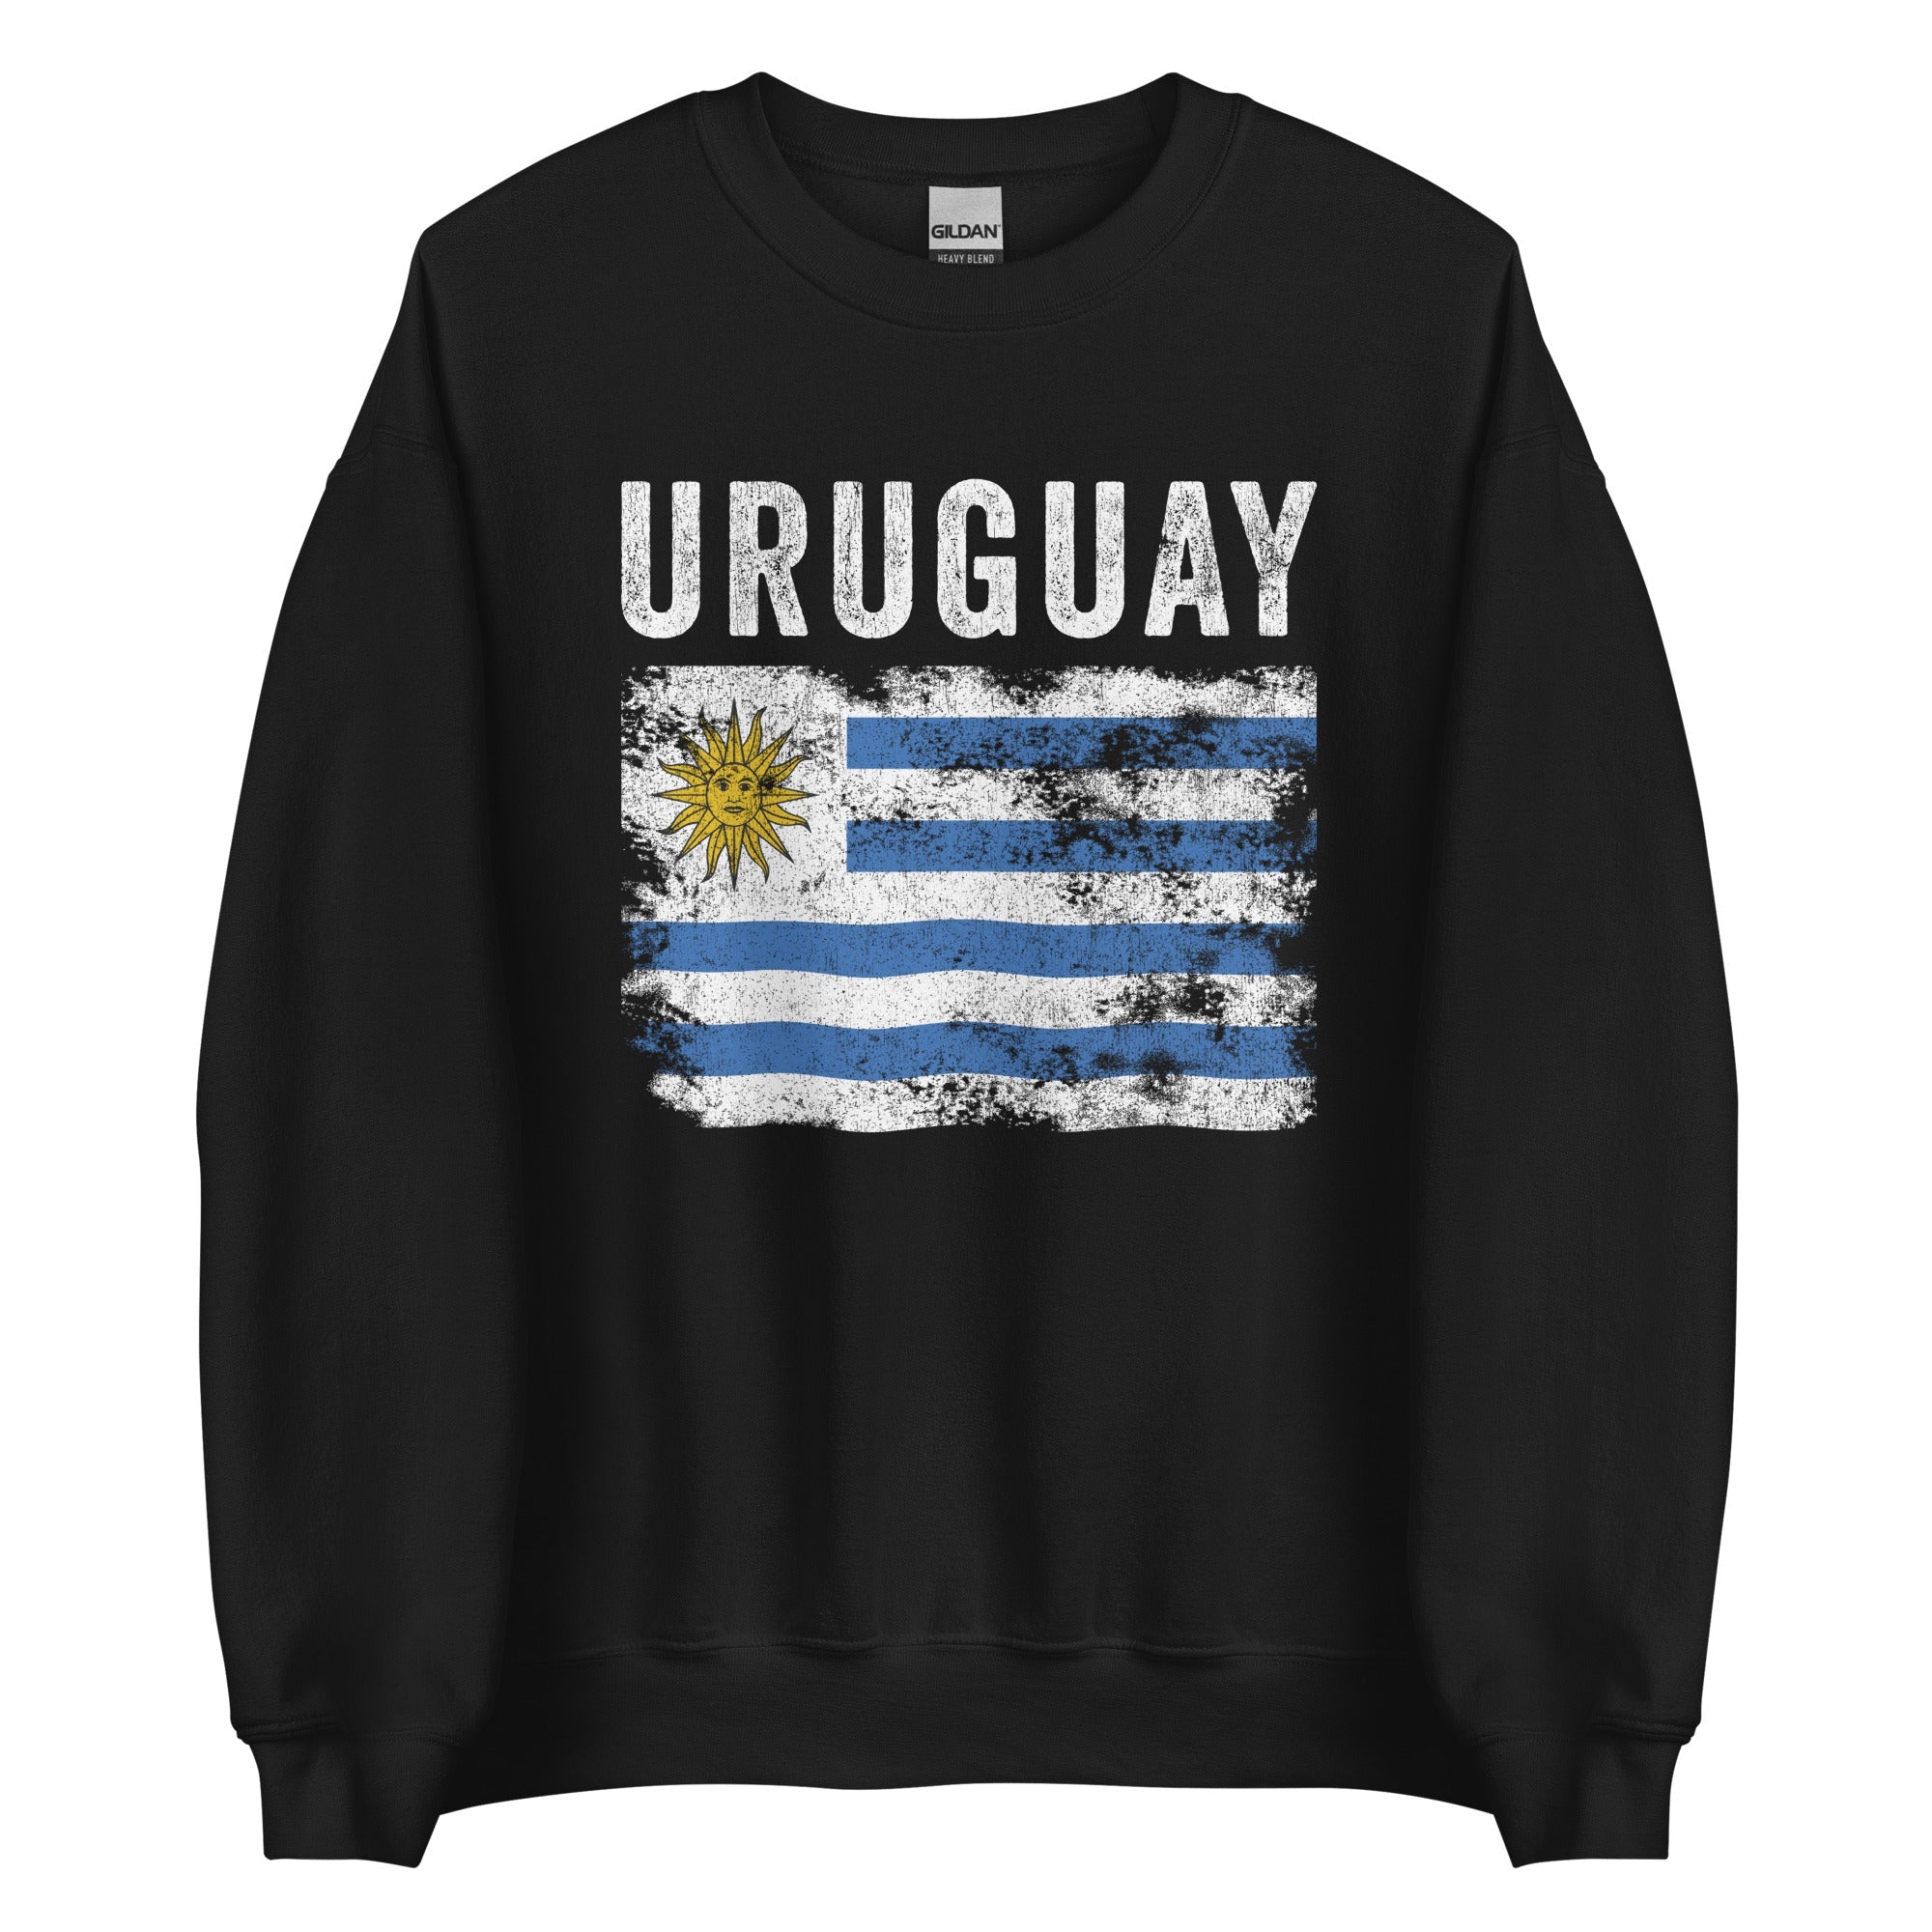 Uruguay Flag Distressed - Uruguayan Flag Sweatshirt